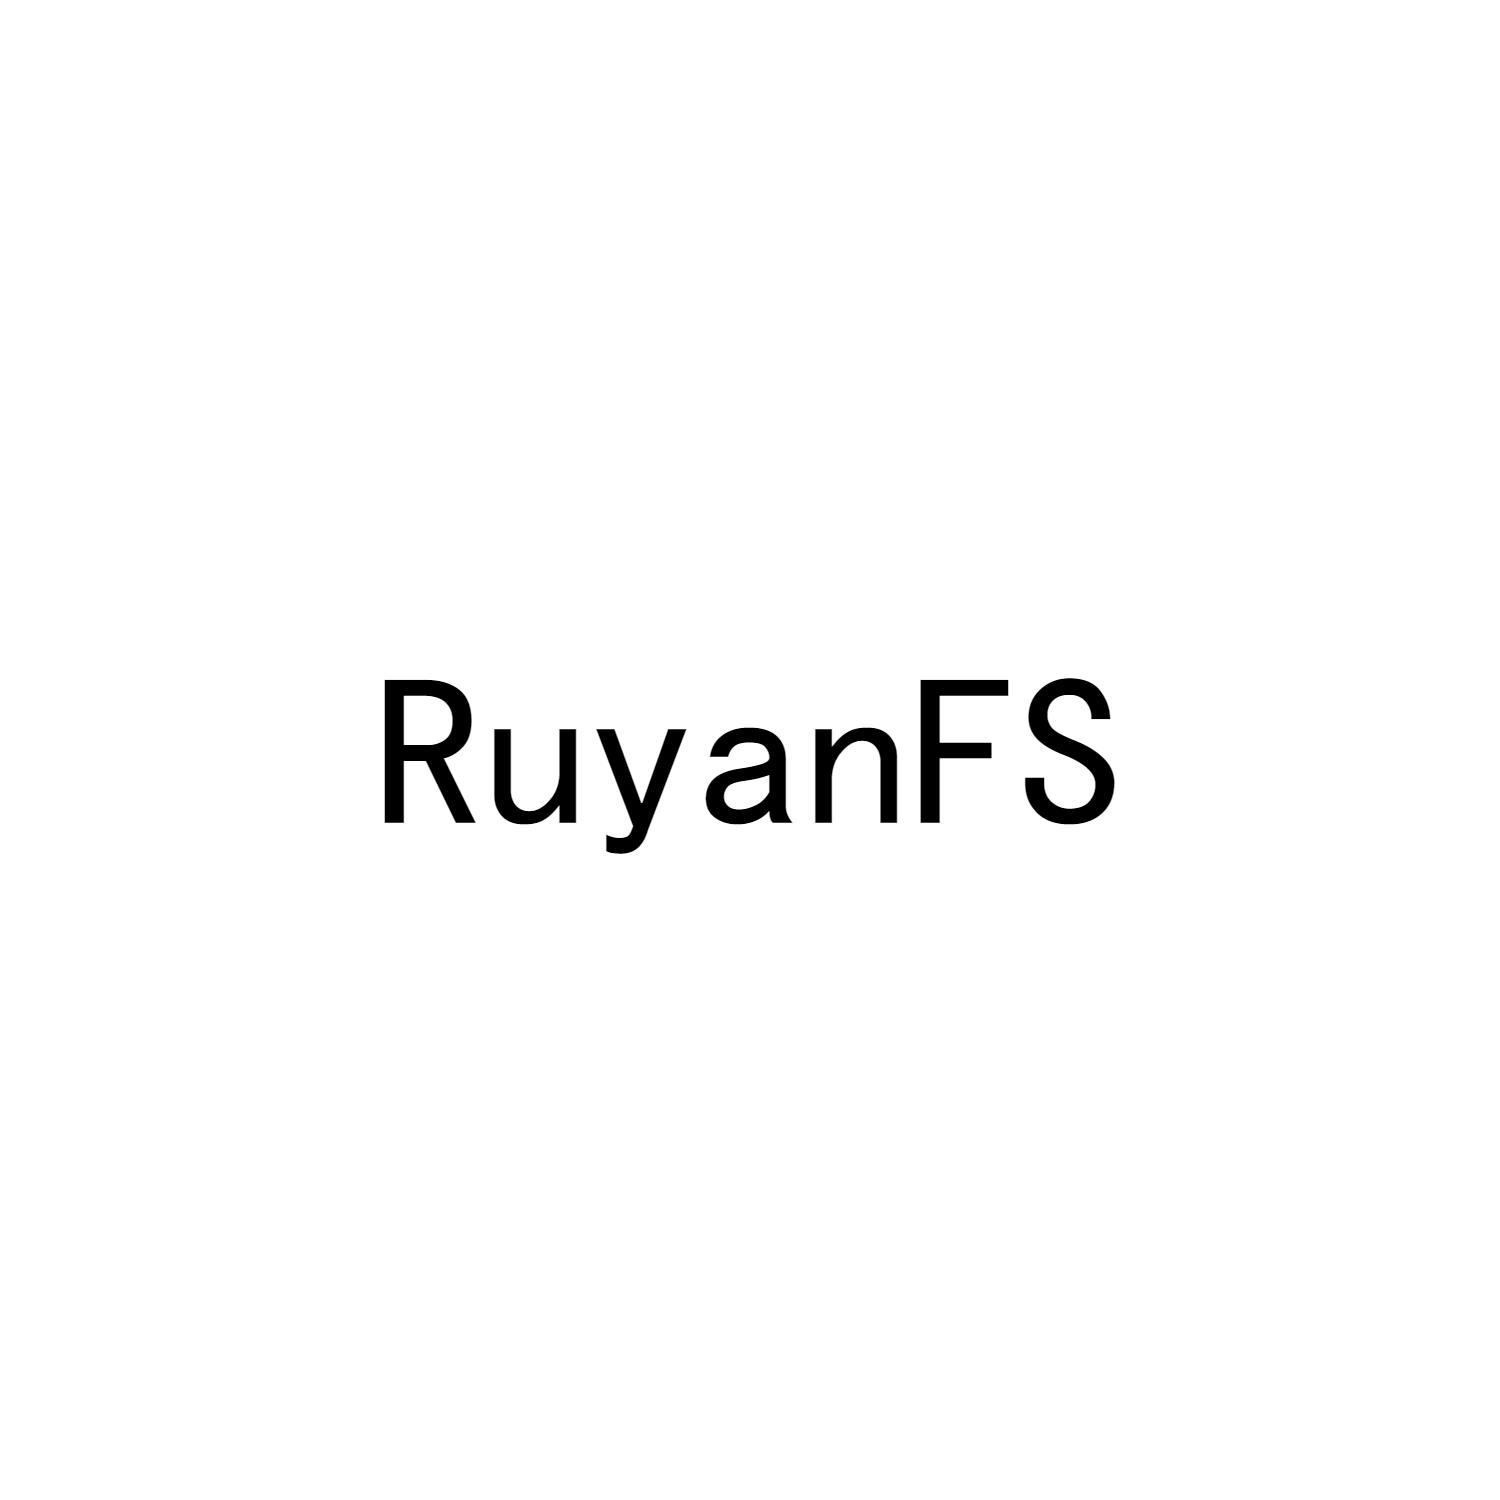 RUYANFS